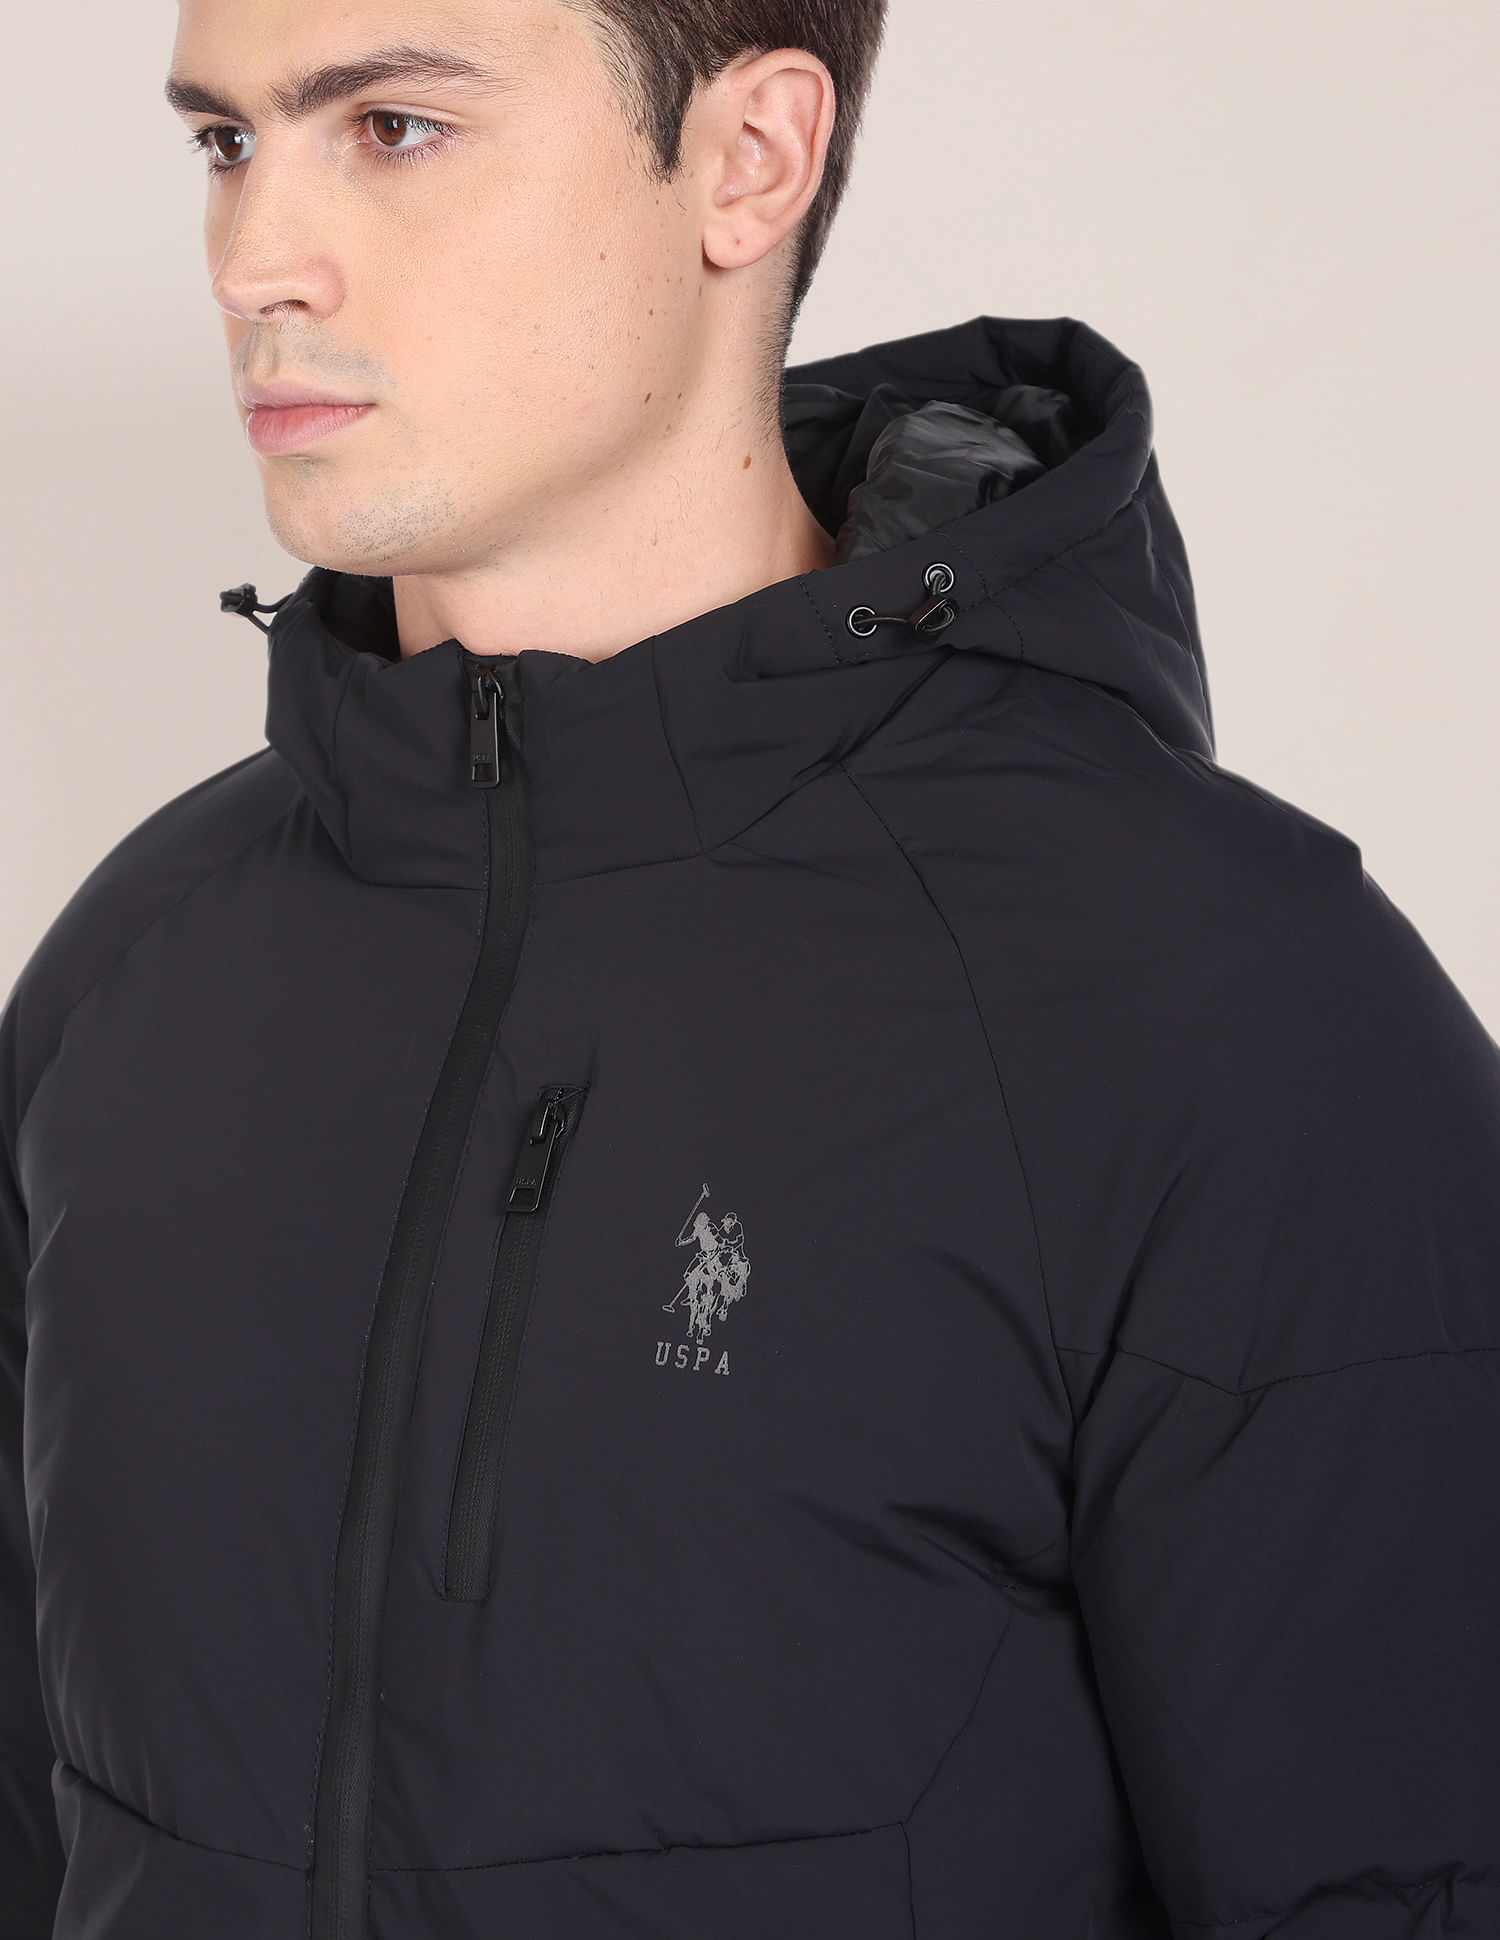 U.S. Polo Assn. Hooded Solid Heat Tech Puffer Jacket, Grey (L)